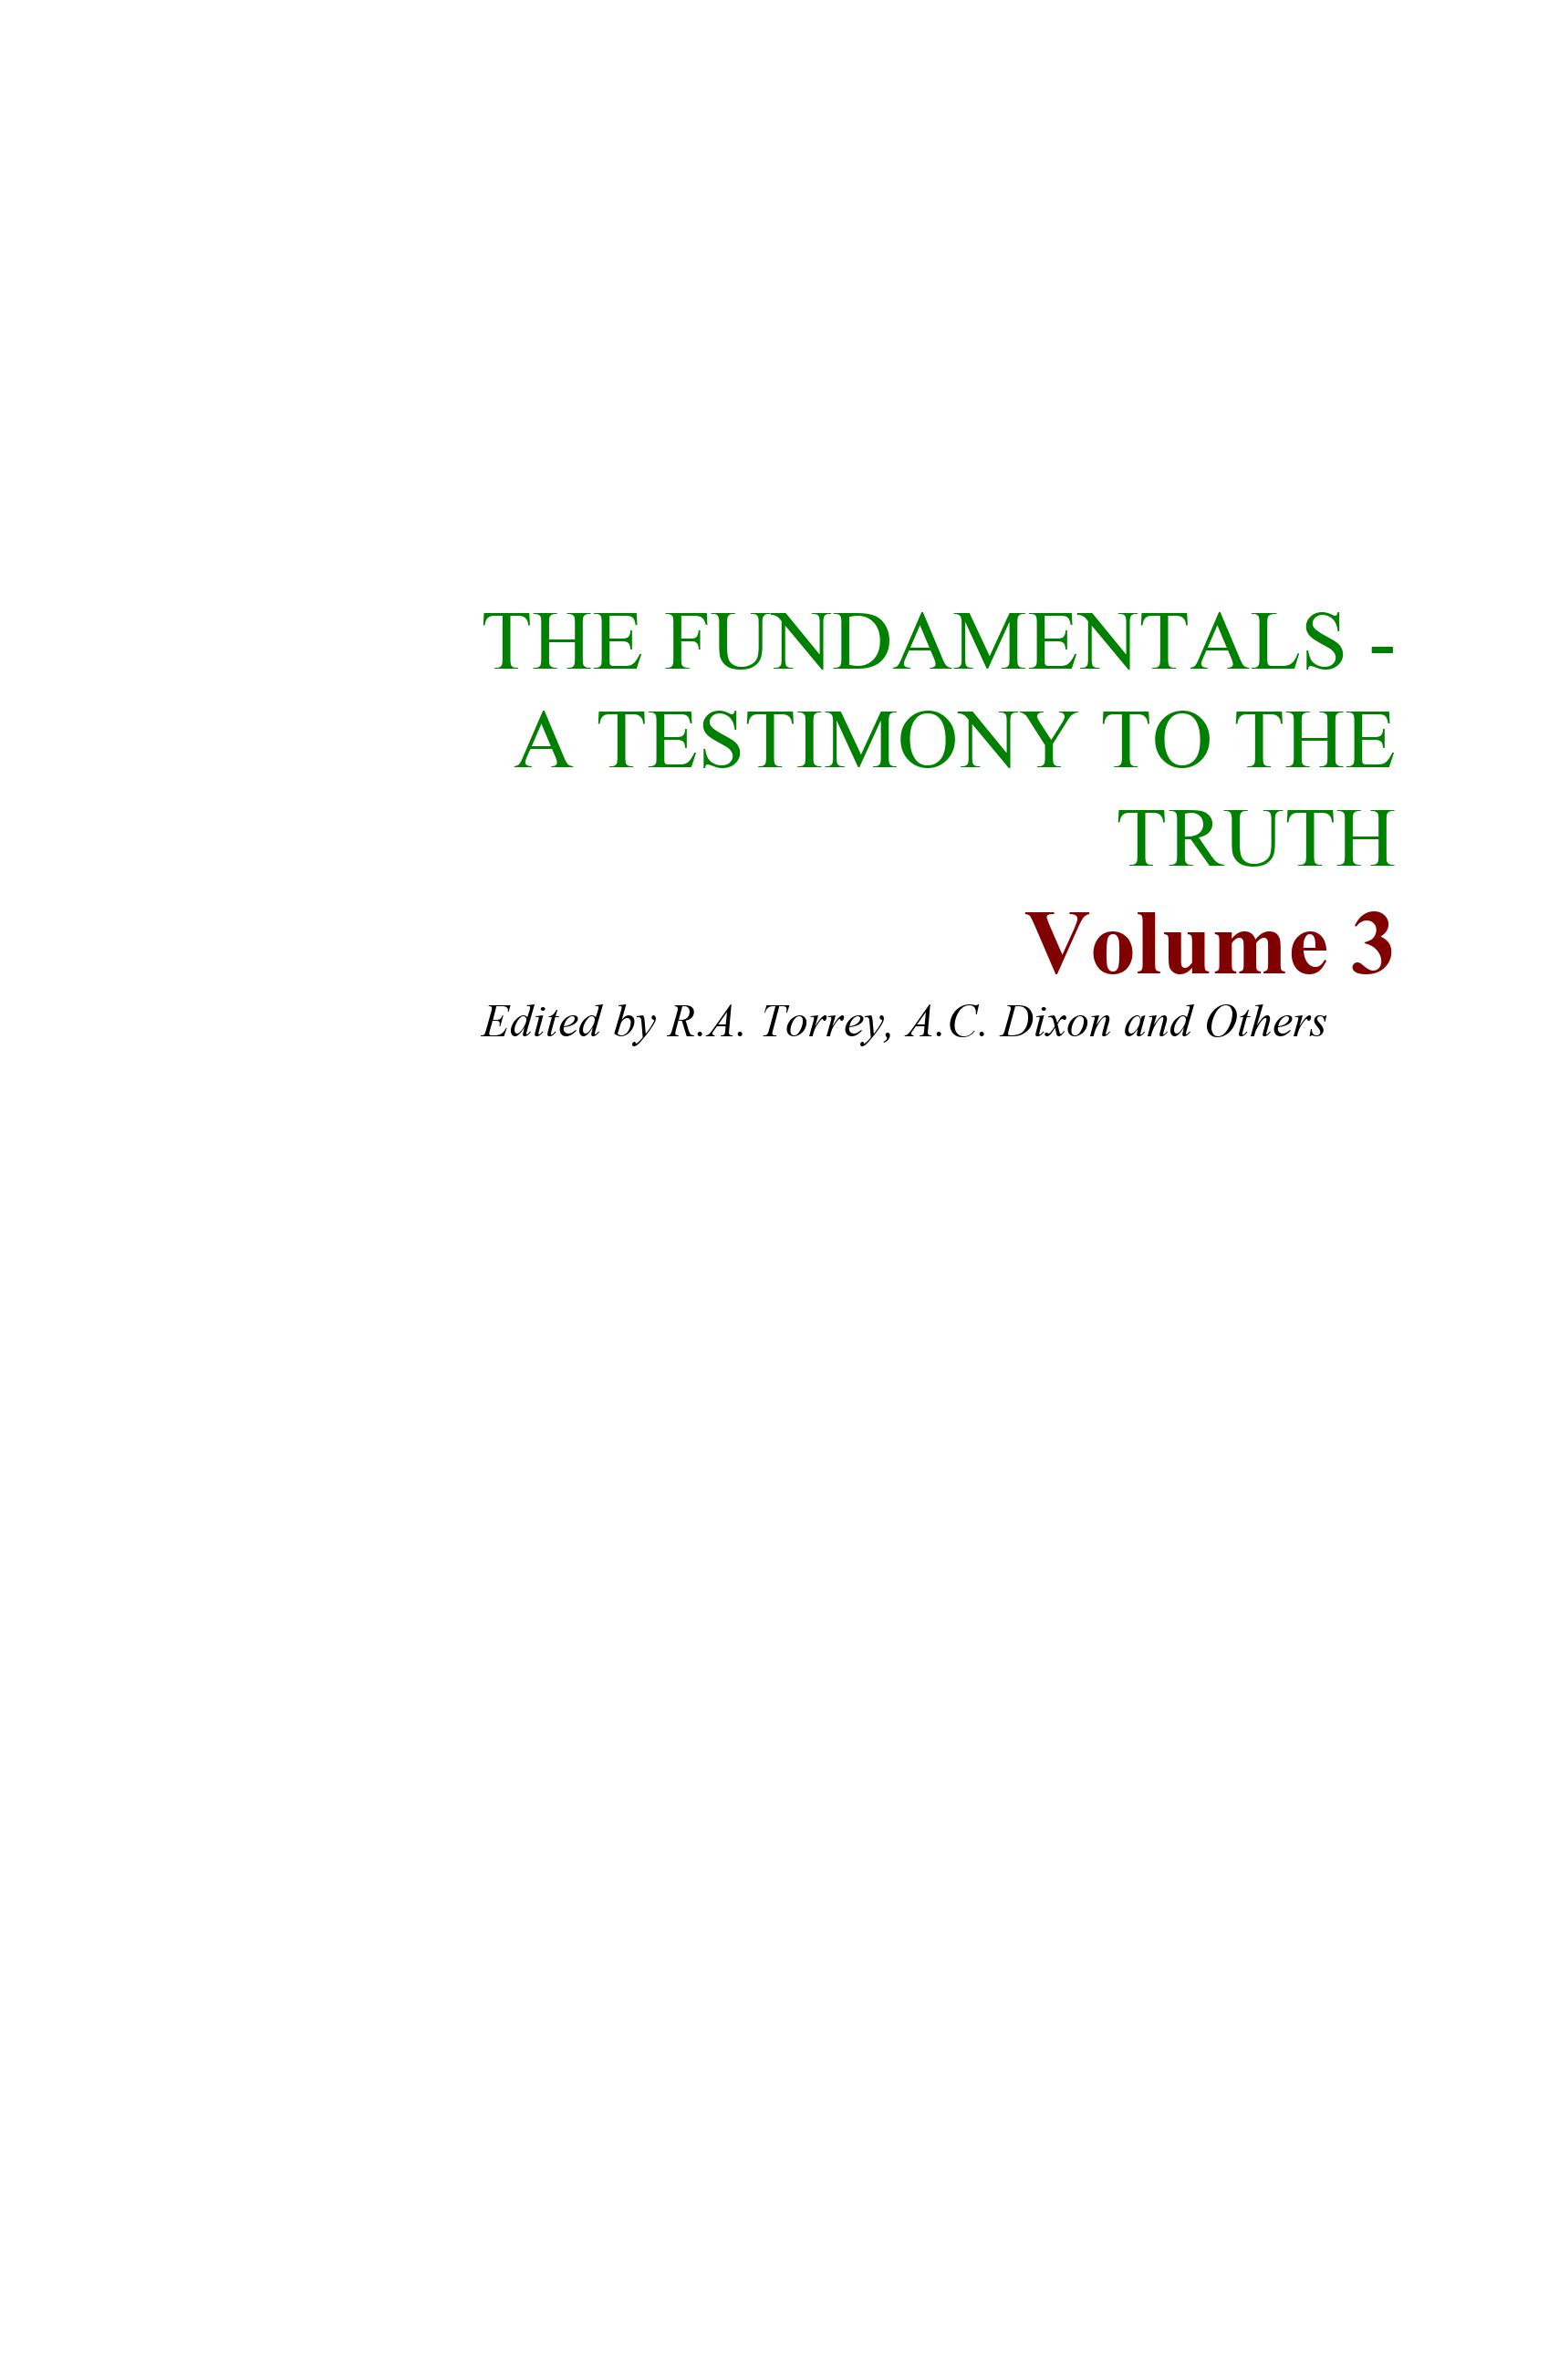 The Fundamentals, Volume 3